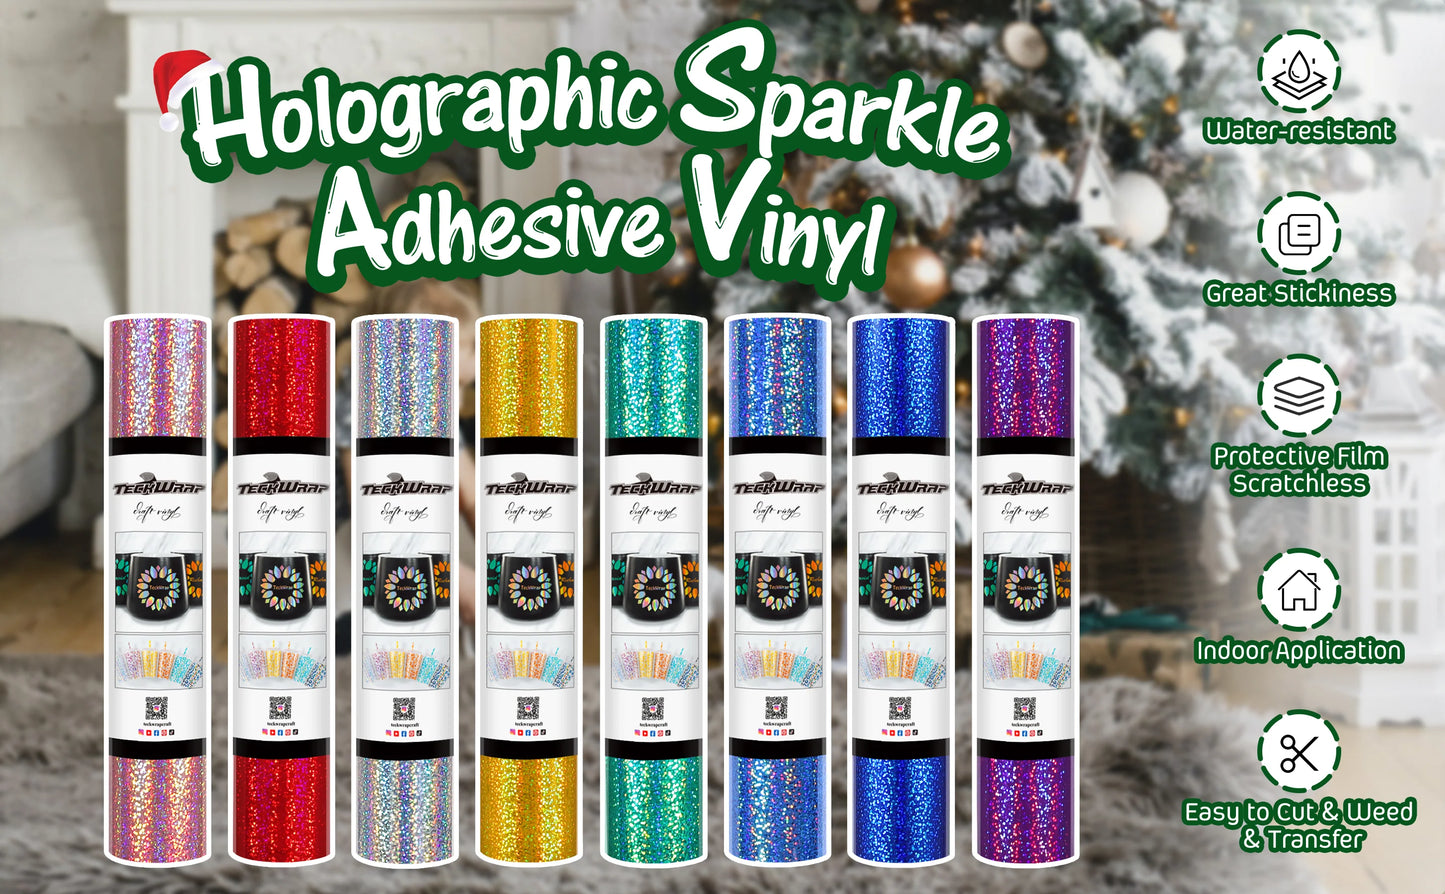 Teckwrap Crystal Rose Gold Holographic Sparkle Adhesive Craft Vinyl